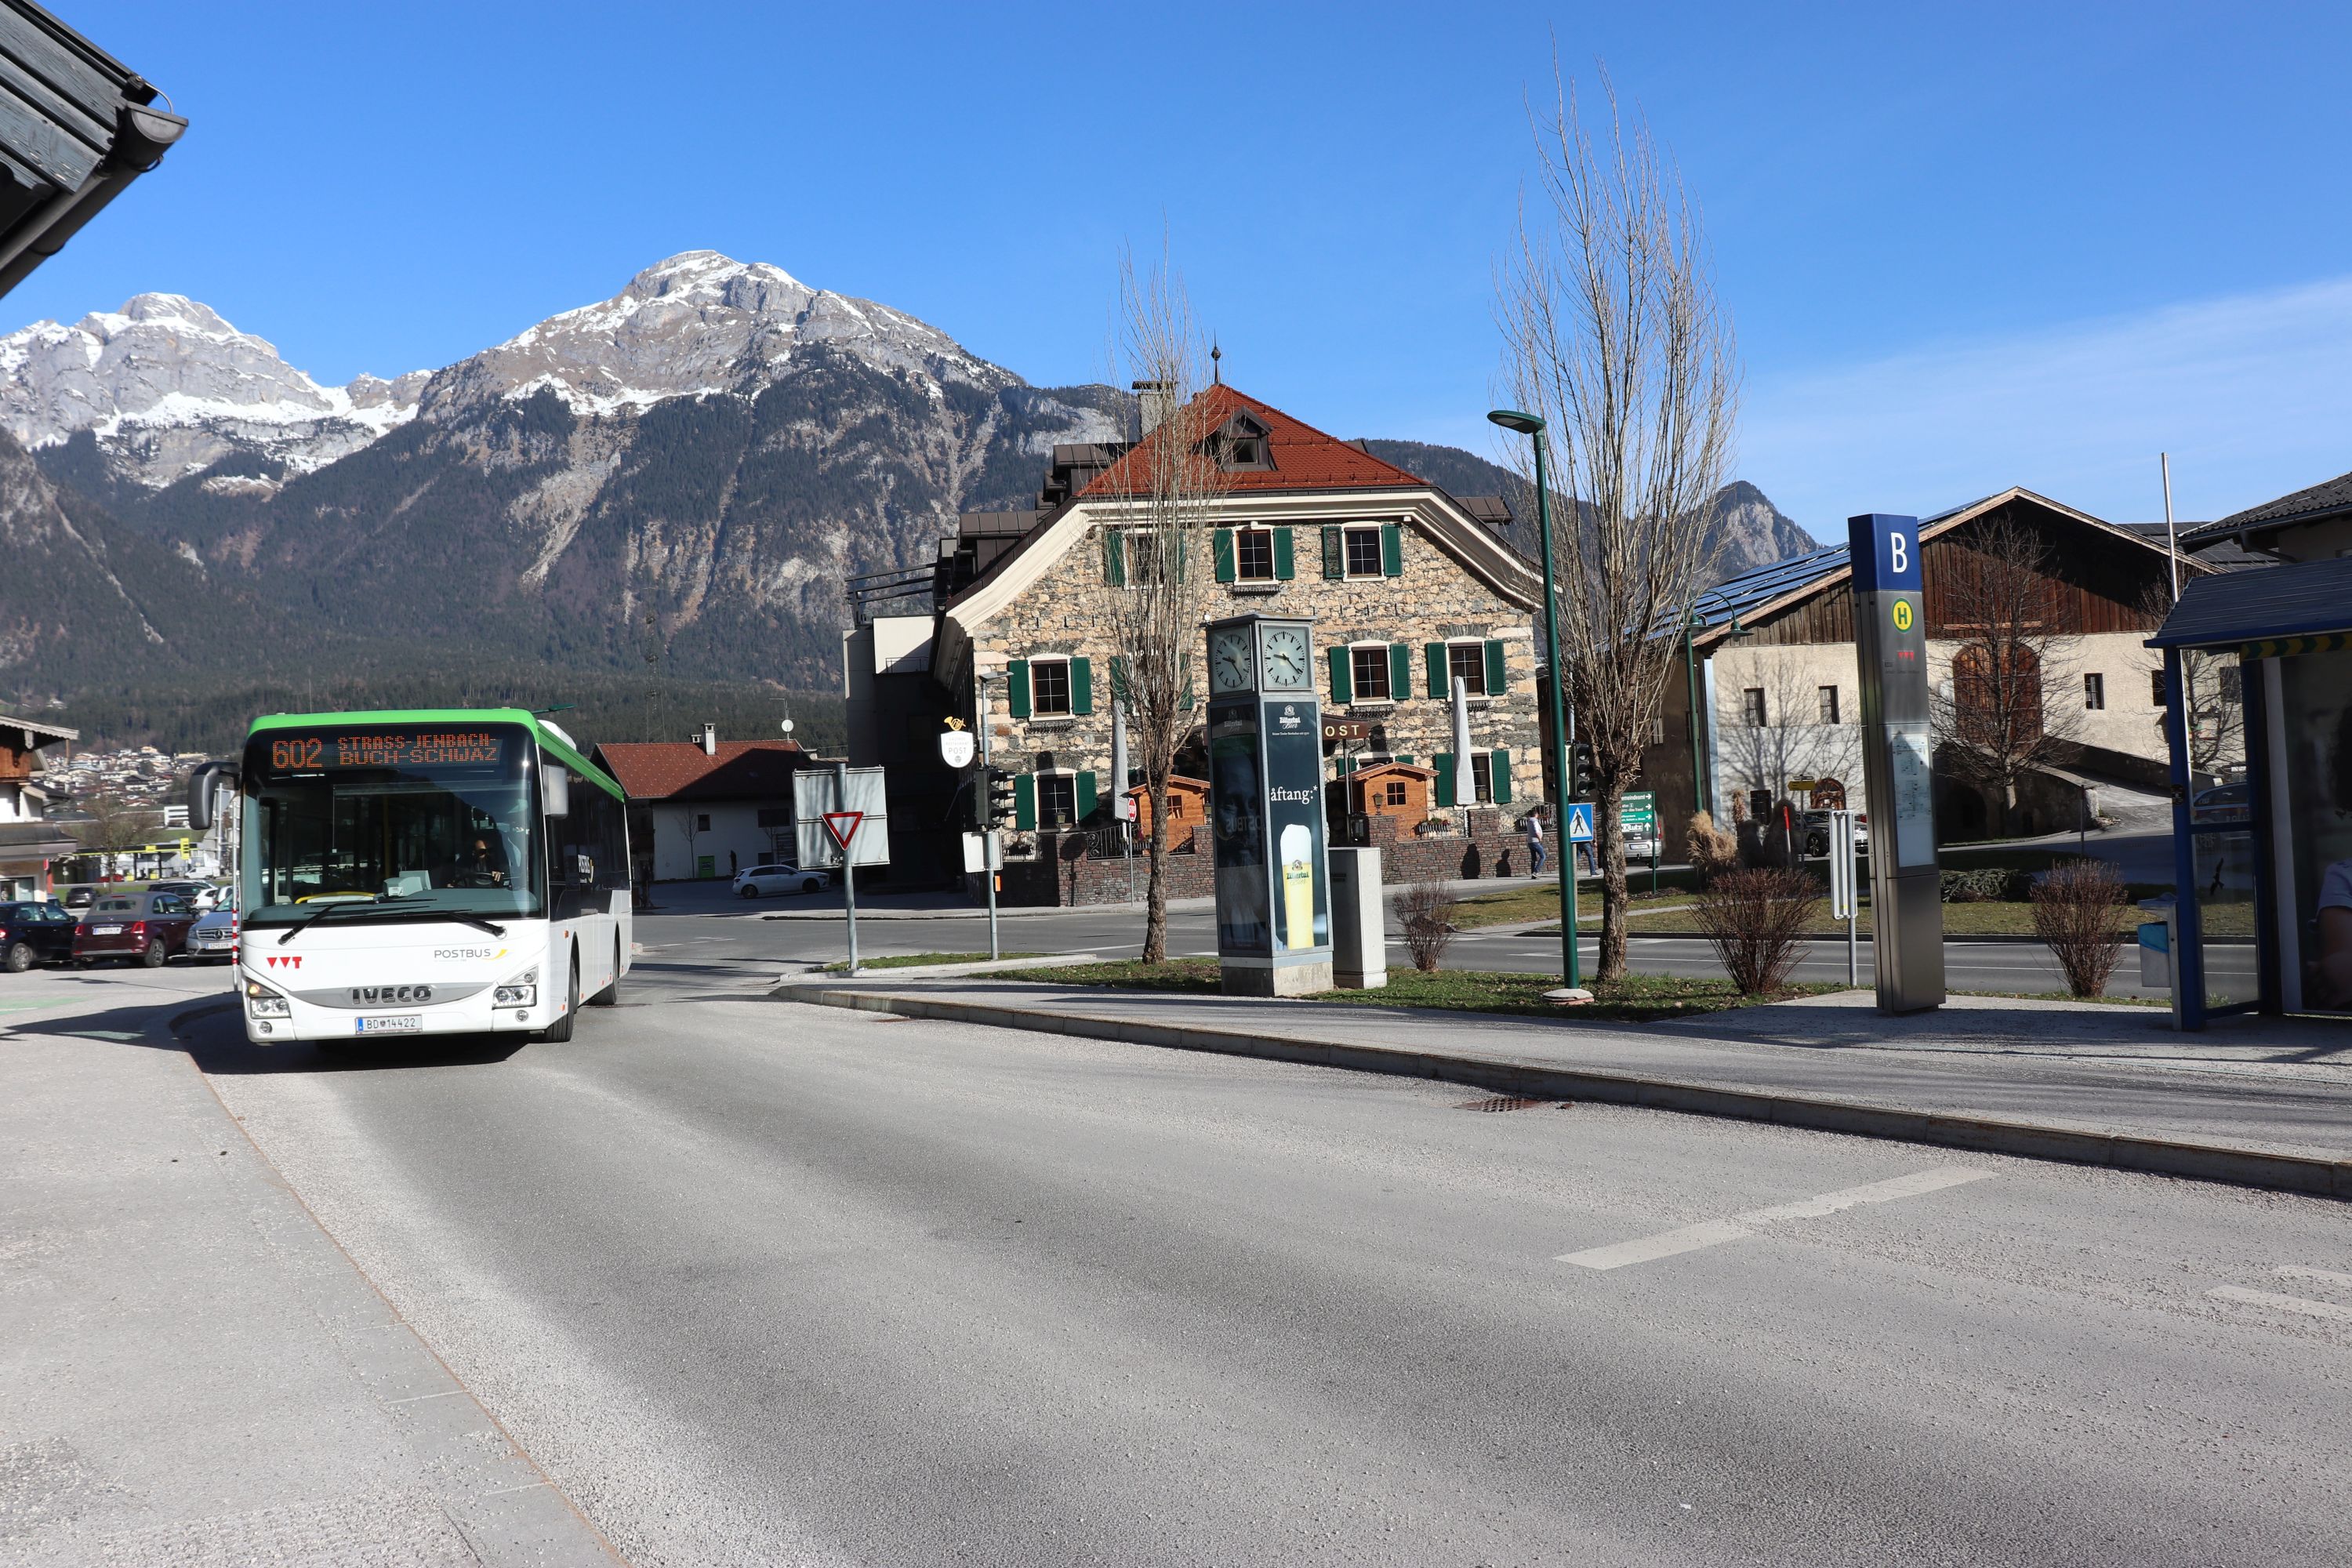 Strass in Zillertal